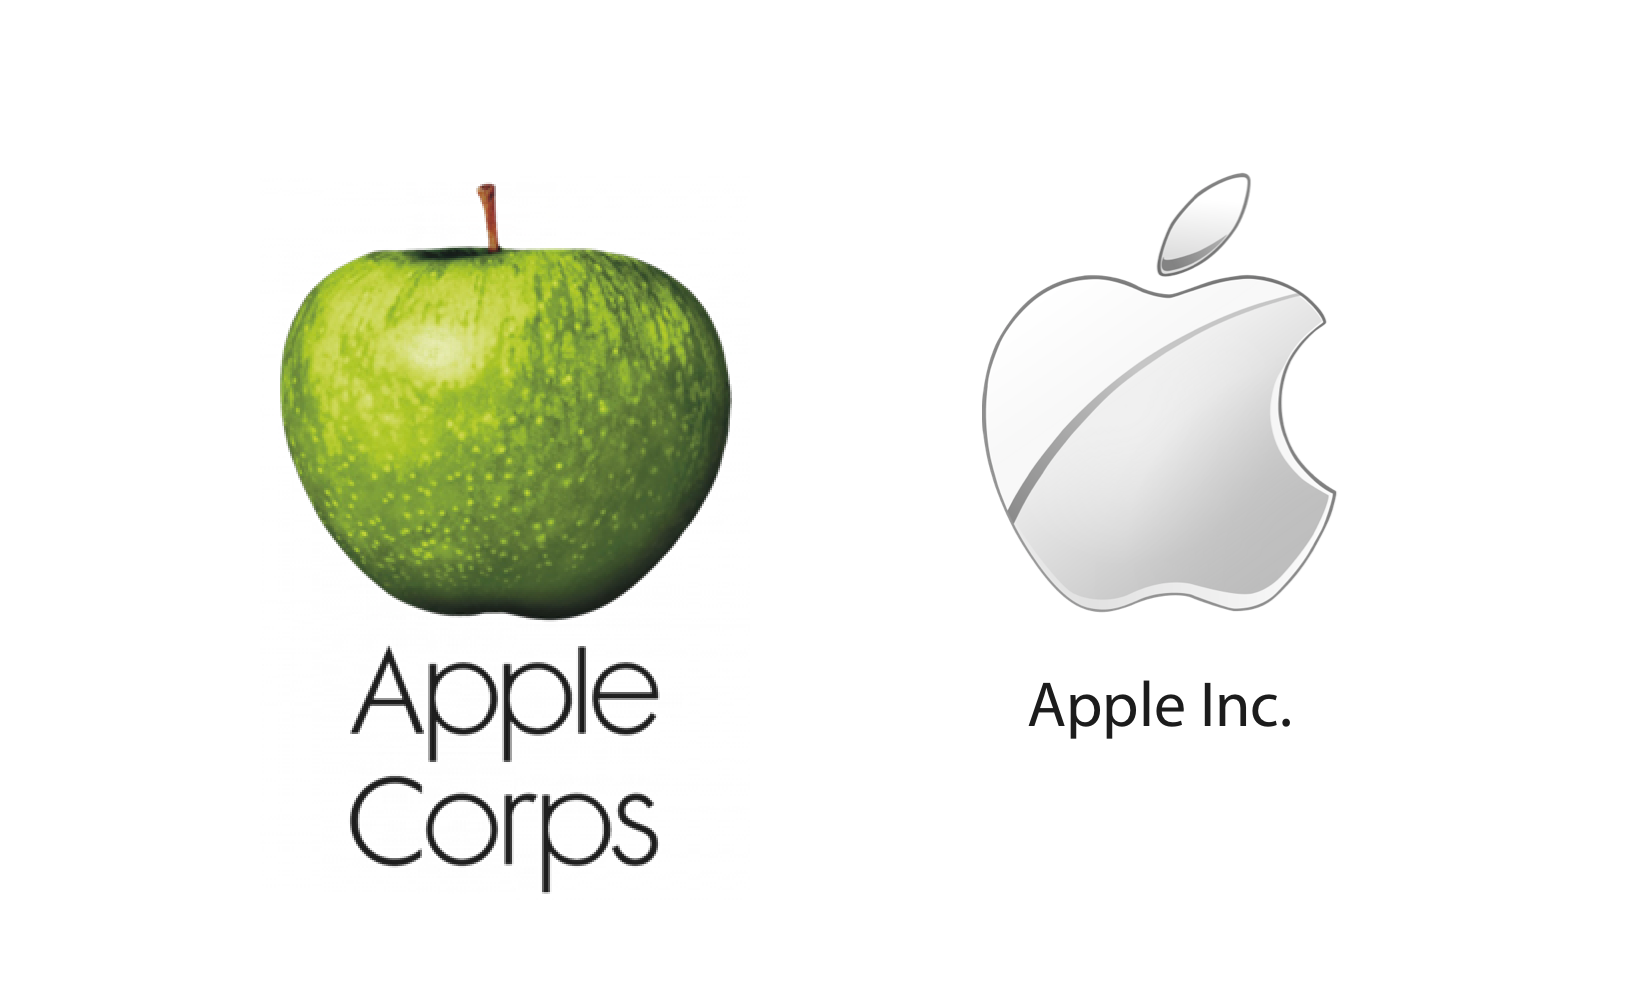 Apple Corps and Apple Inc Logos